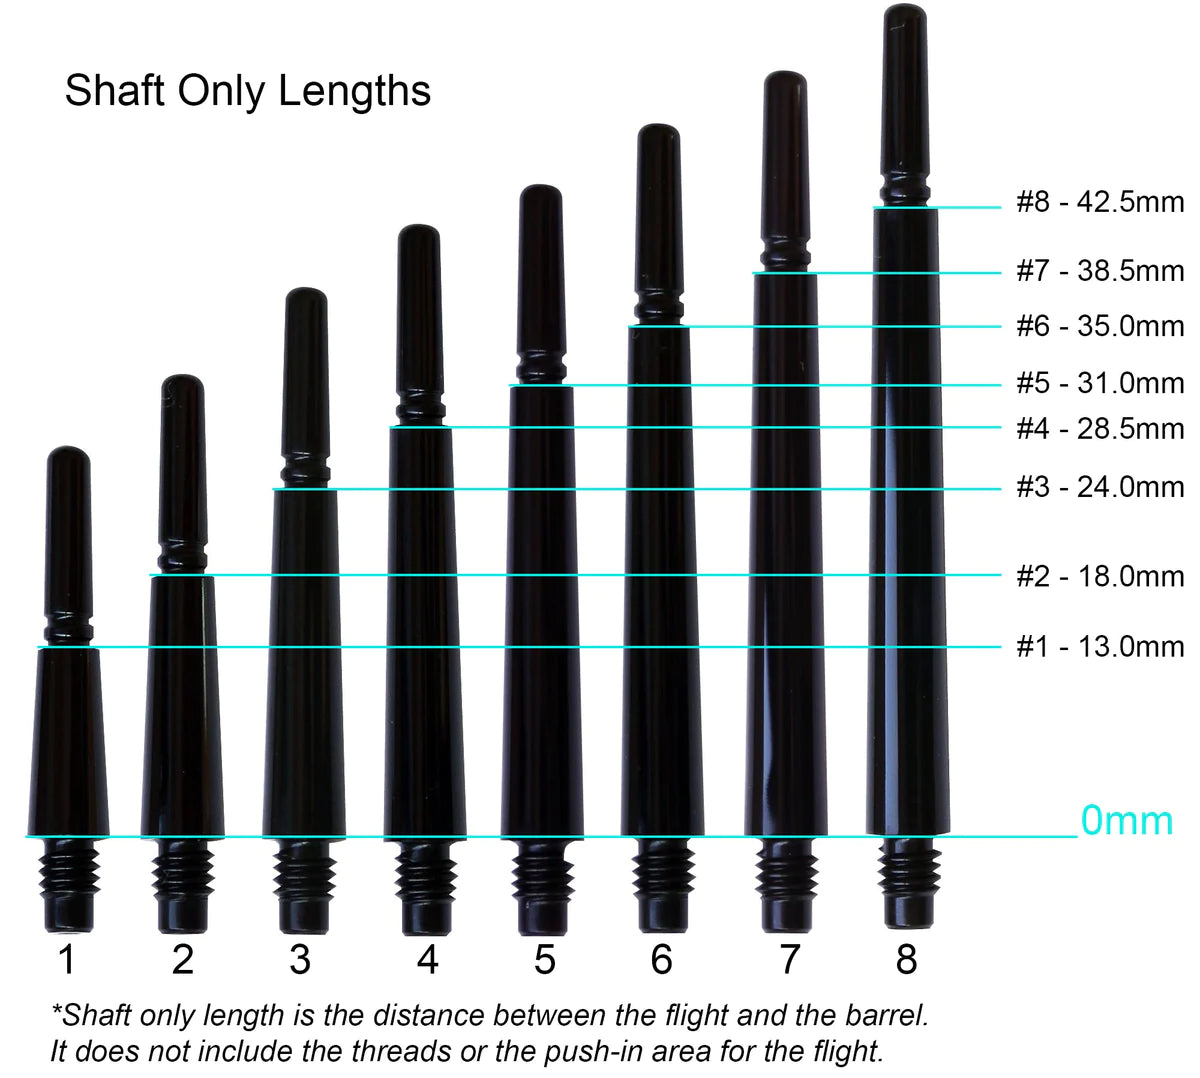 A comprehensive length comparison chart of Fit Flight dart shafts.